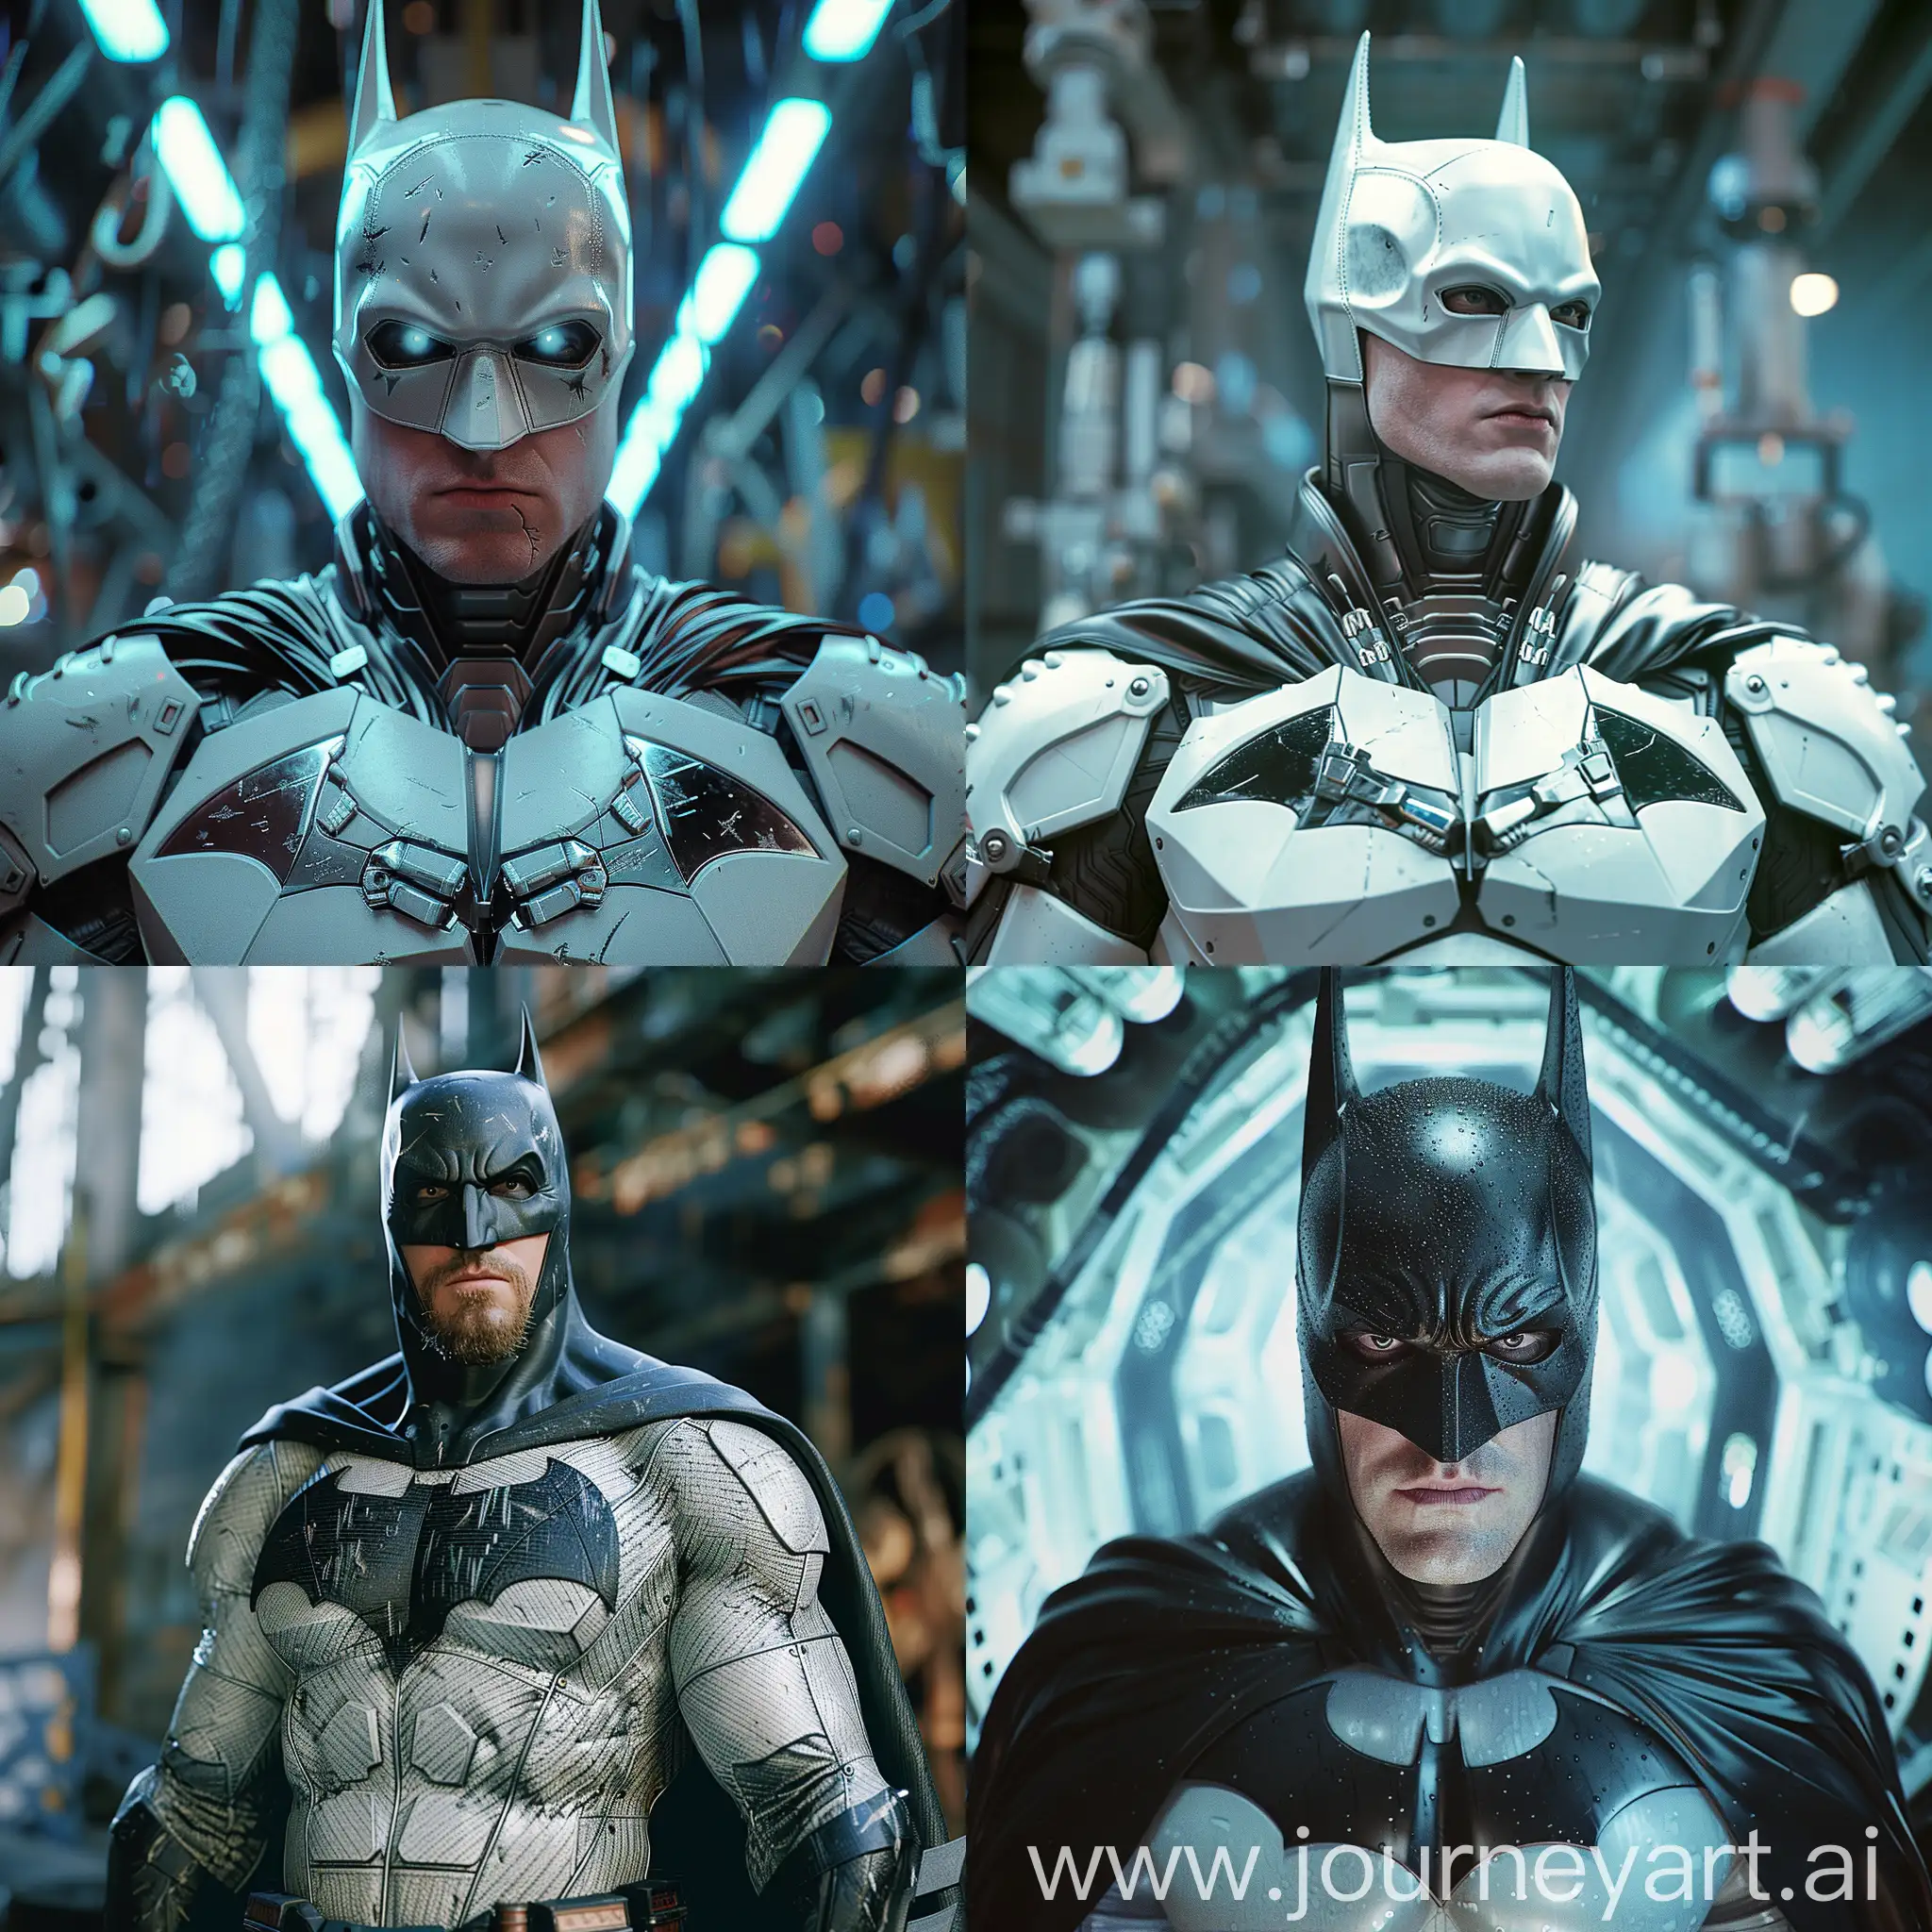 Christian-Bale-as-Batman-in-White-HyperRealistic-Cinema-Art-with-Kodak-Portra-400